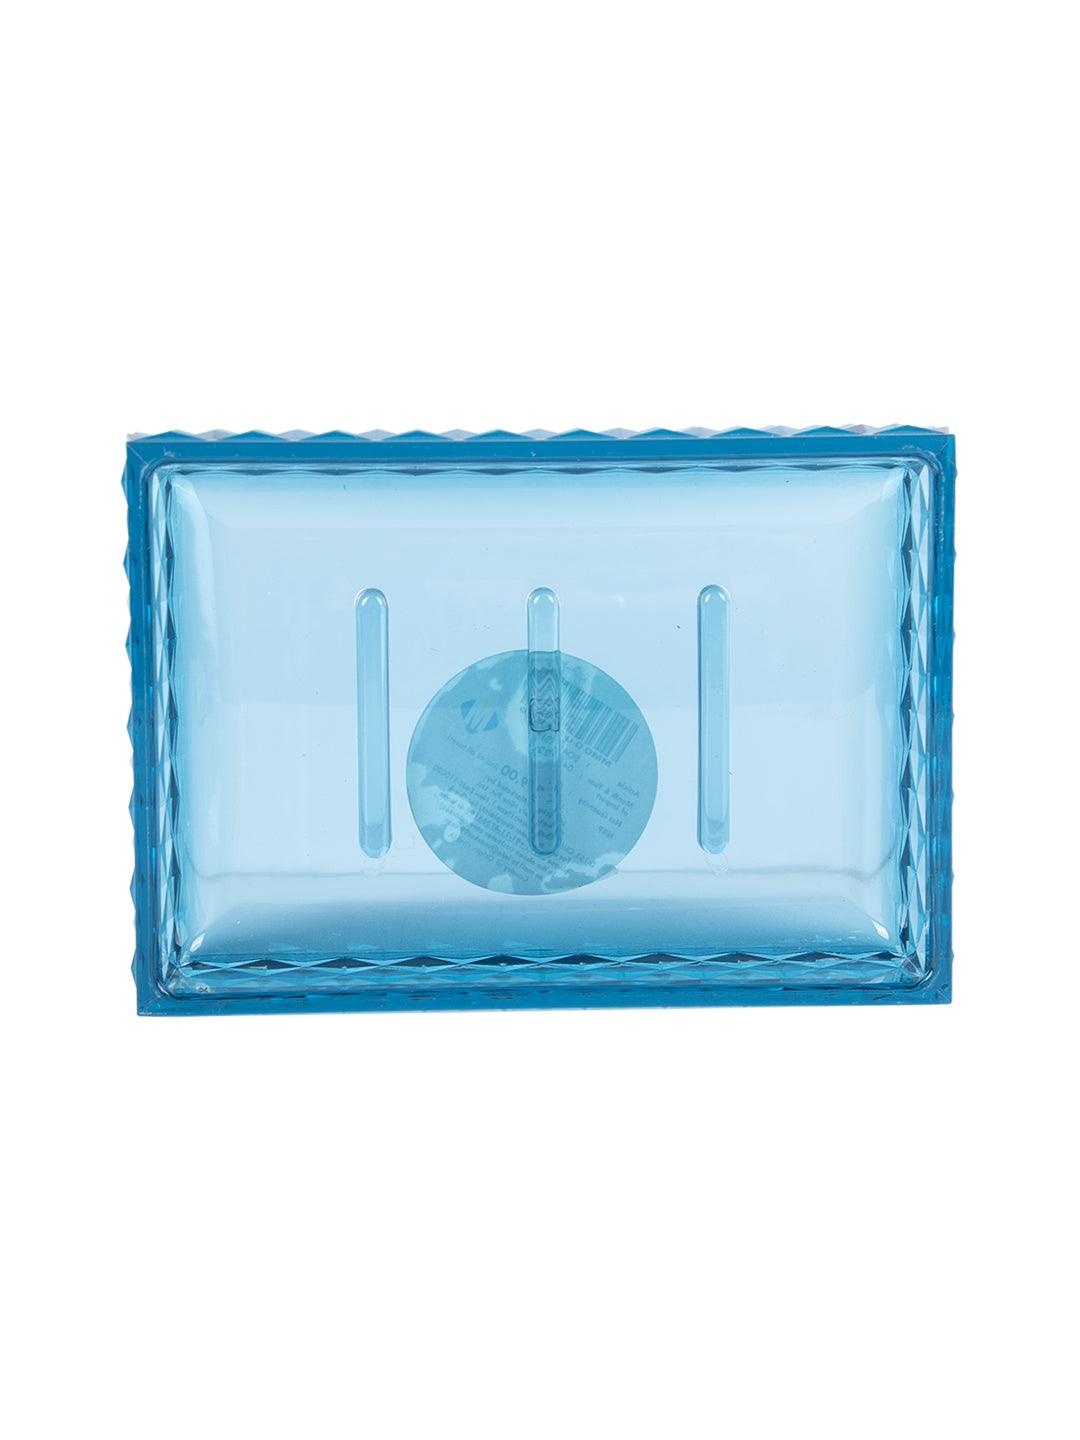 Market99 Soap Dish Holder, Rectangular Shape Blue Plastic Soap Holder - MARKET 99